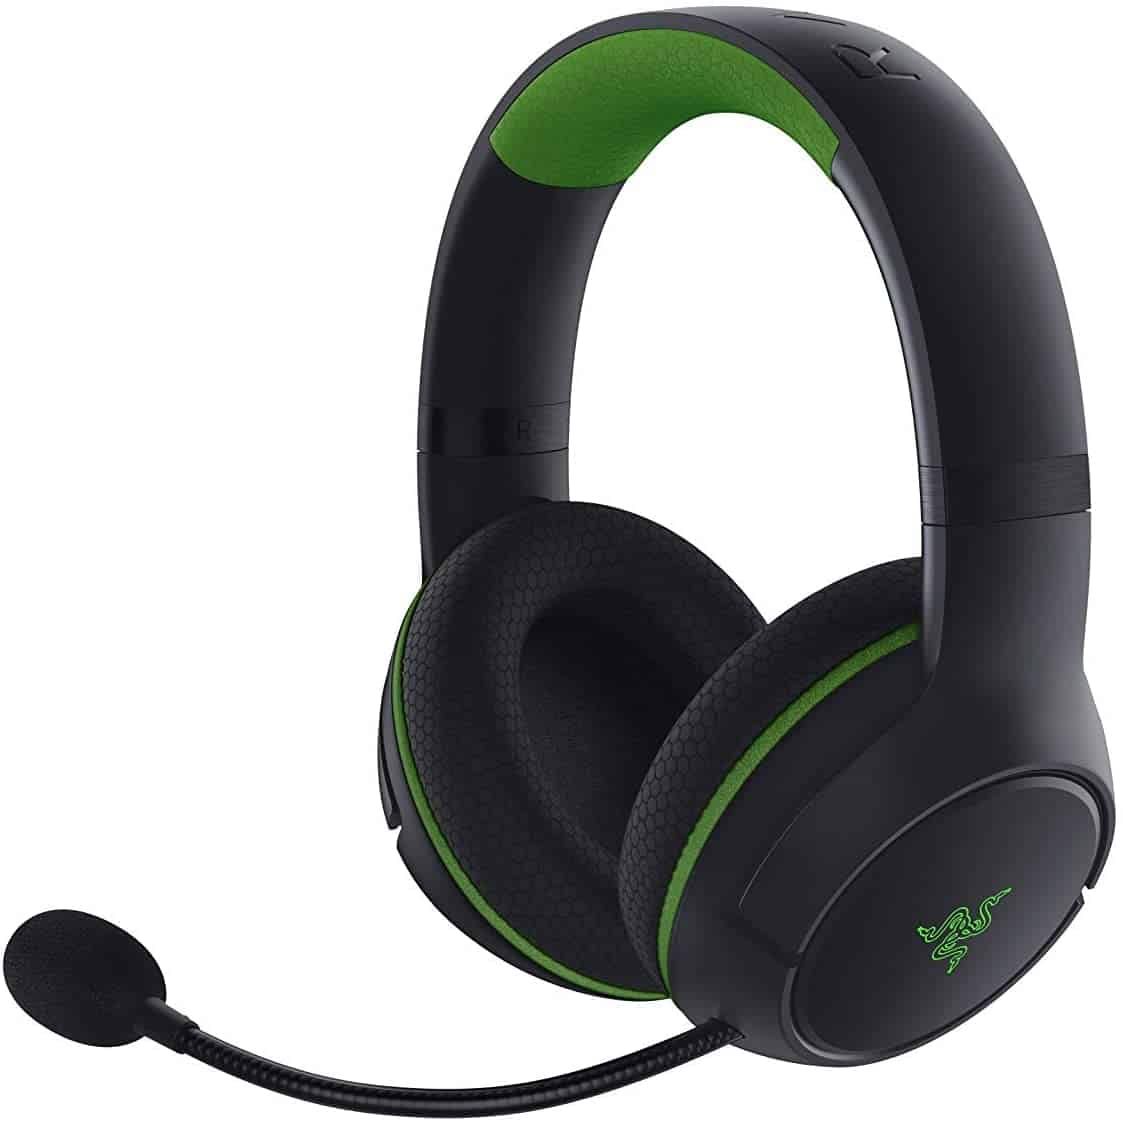 Razer Kaira Xbox Series Wireless Headset - für 69,99 € inkl. Versand statt 99,98 €